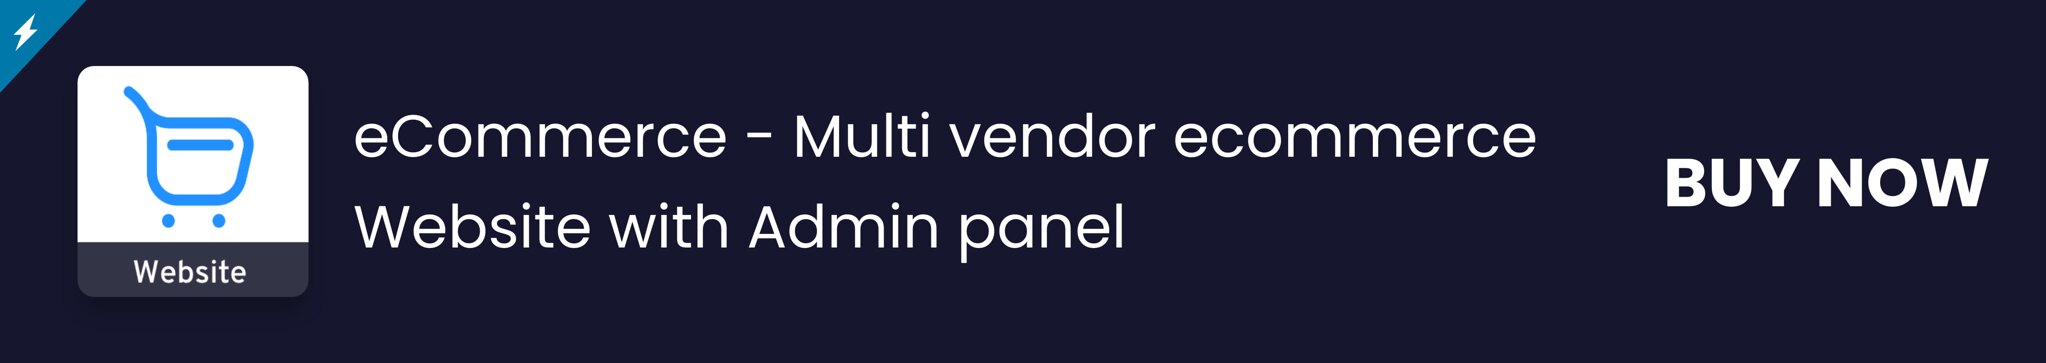 eCommerce - Multi vendor ecommerce Flutter App with Admin panel - 1